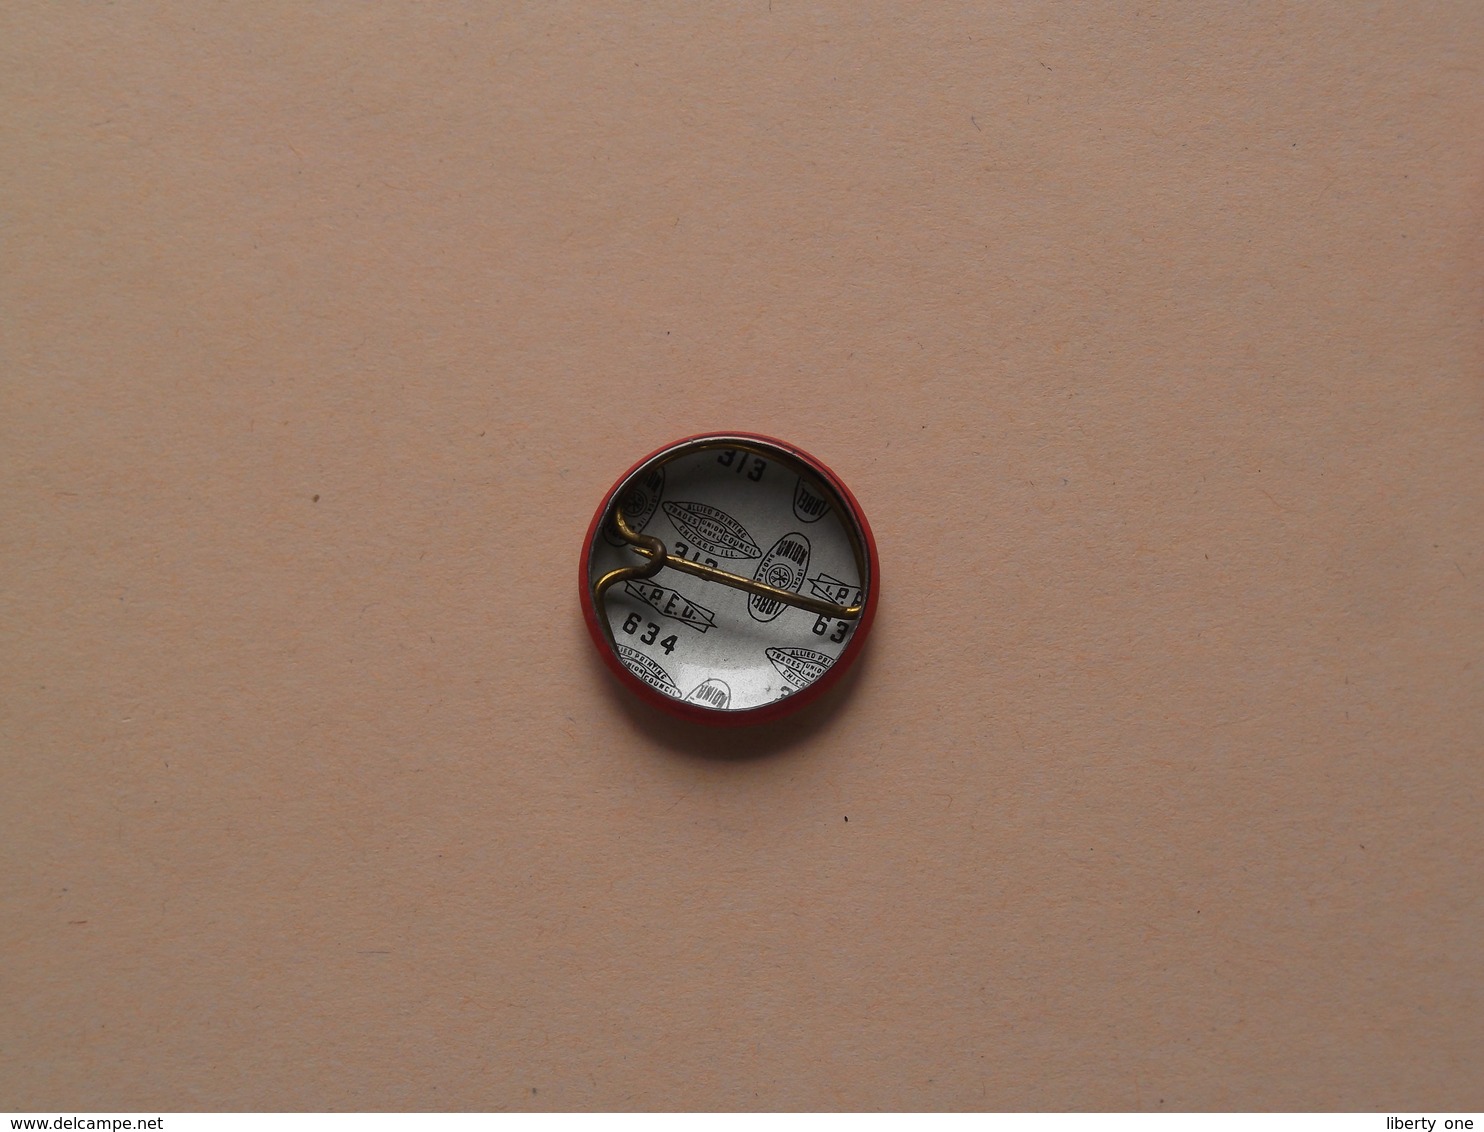 BEGINNER SWIMMER ( Red Cross ) Older Button / Pin / Speld / Epingle ( +/- 2 Cm. ) Zie Foto Voor Detail / Metal Button ! - Swimming